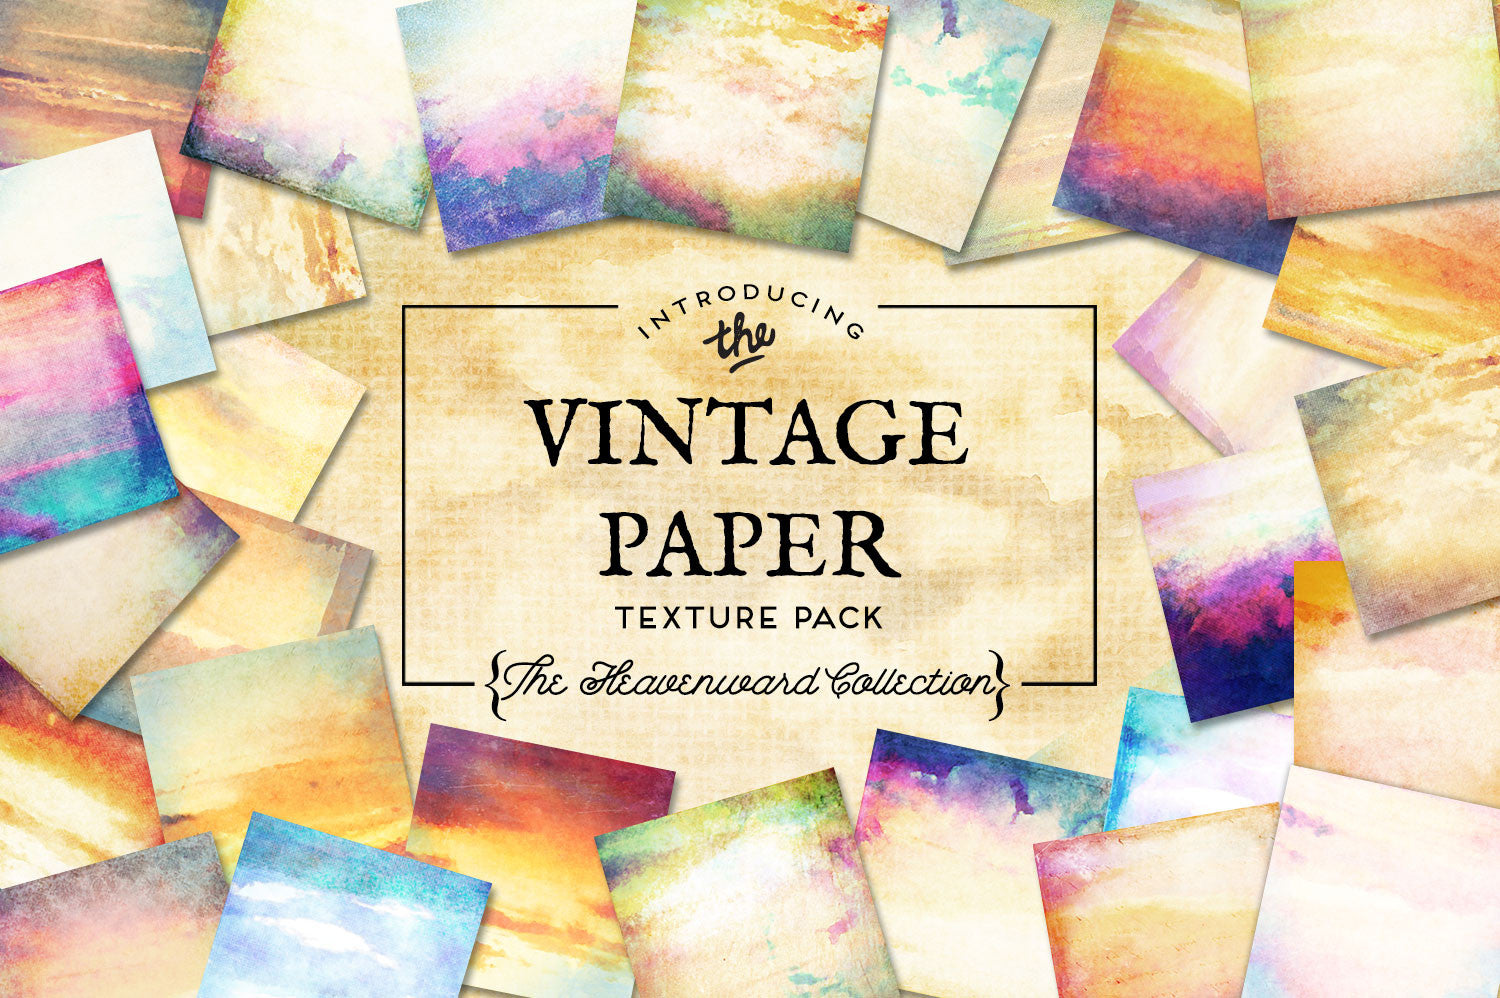 Vintage Paper Textures Mega Pack